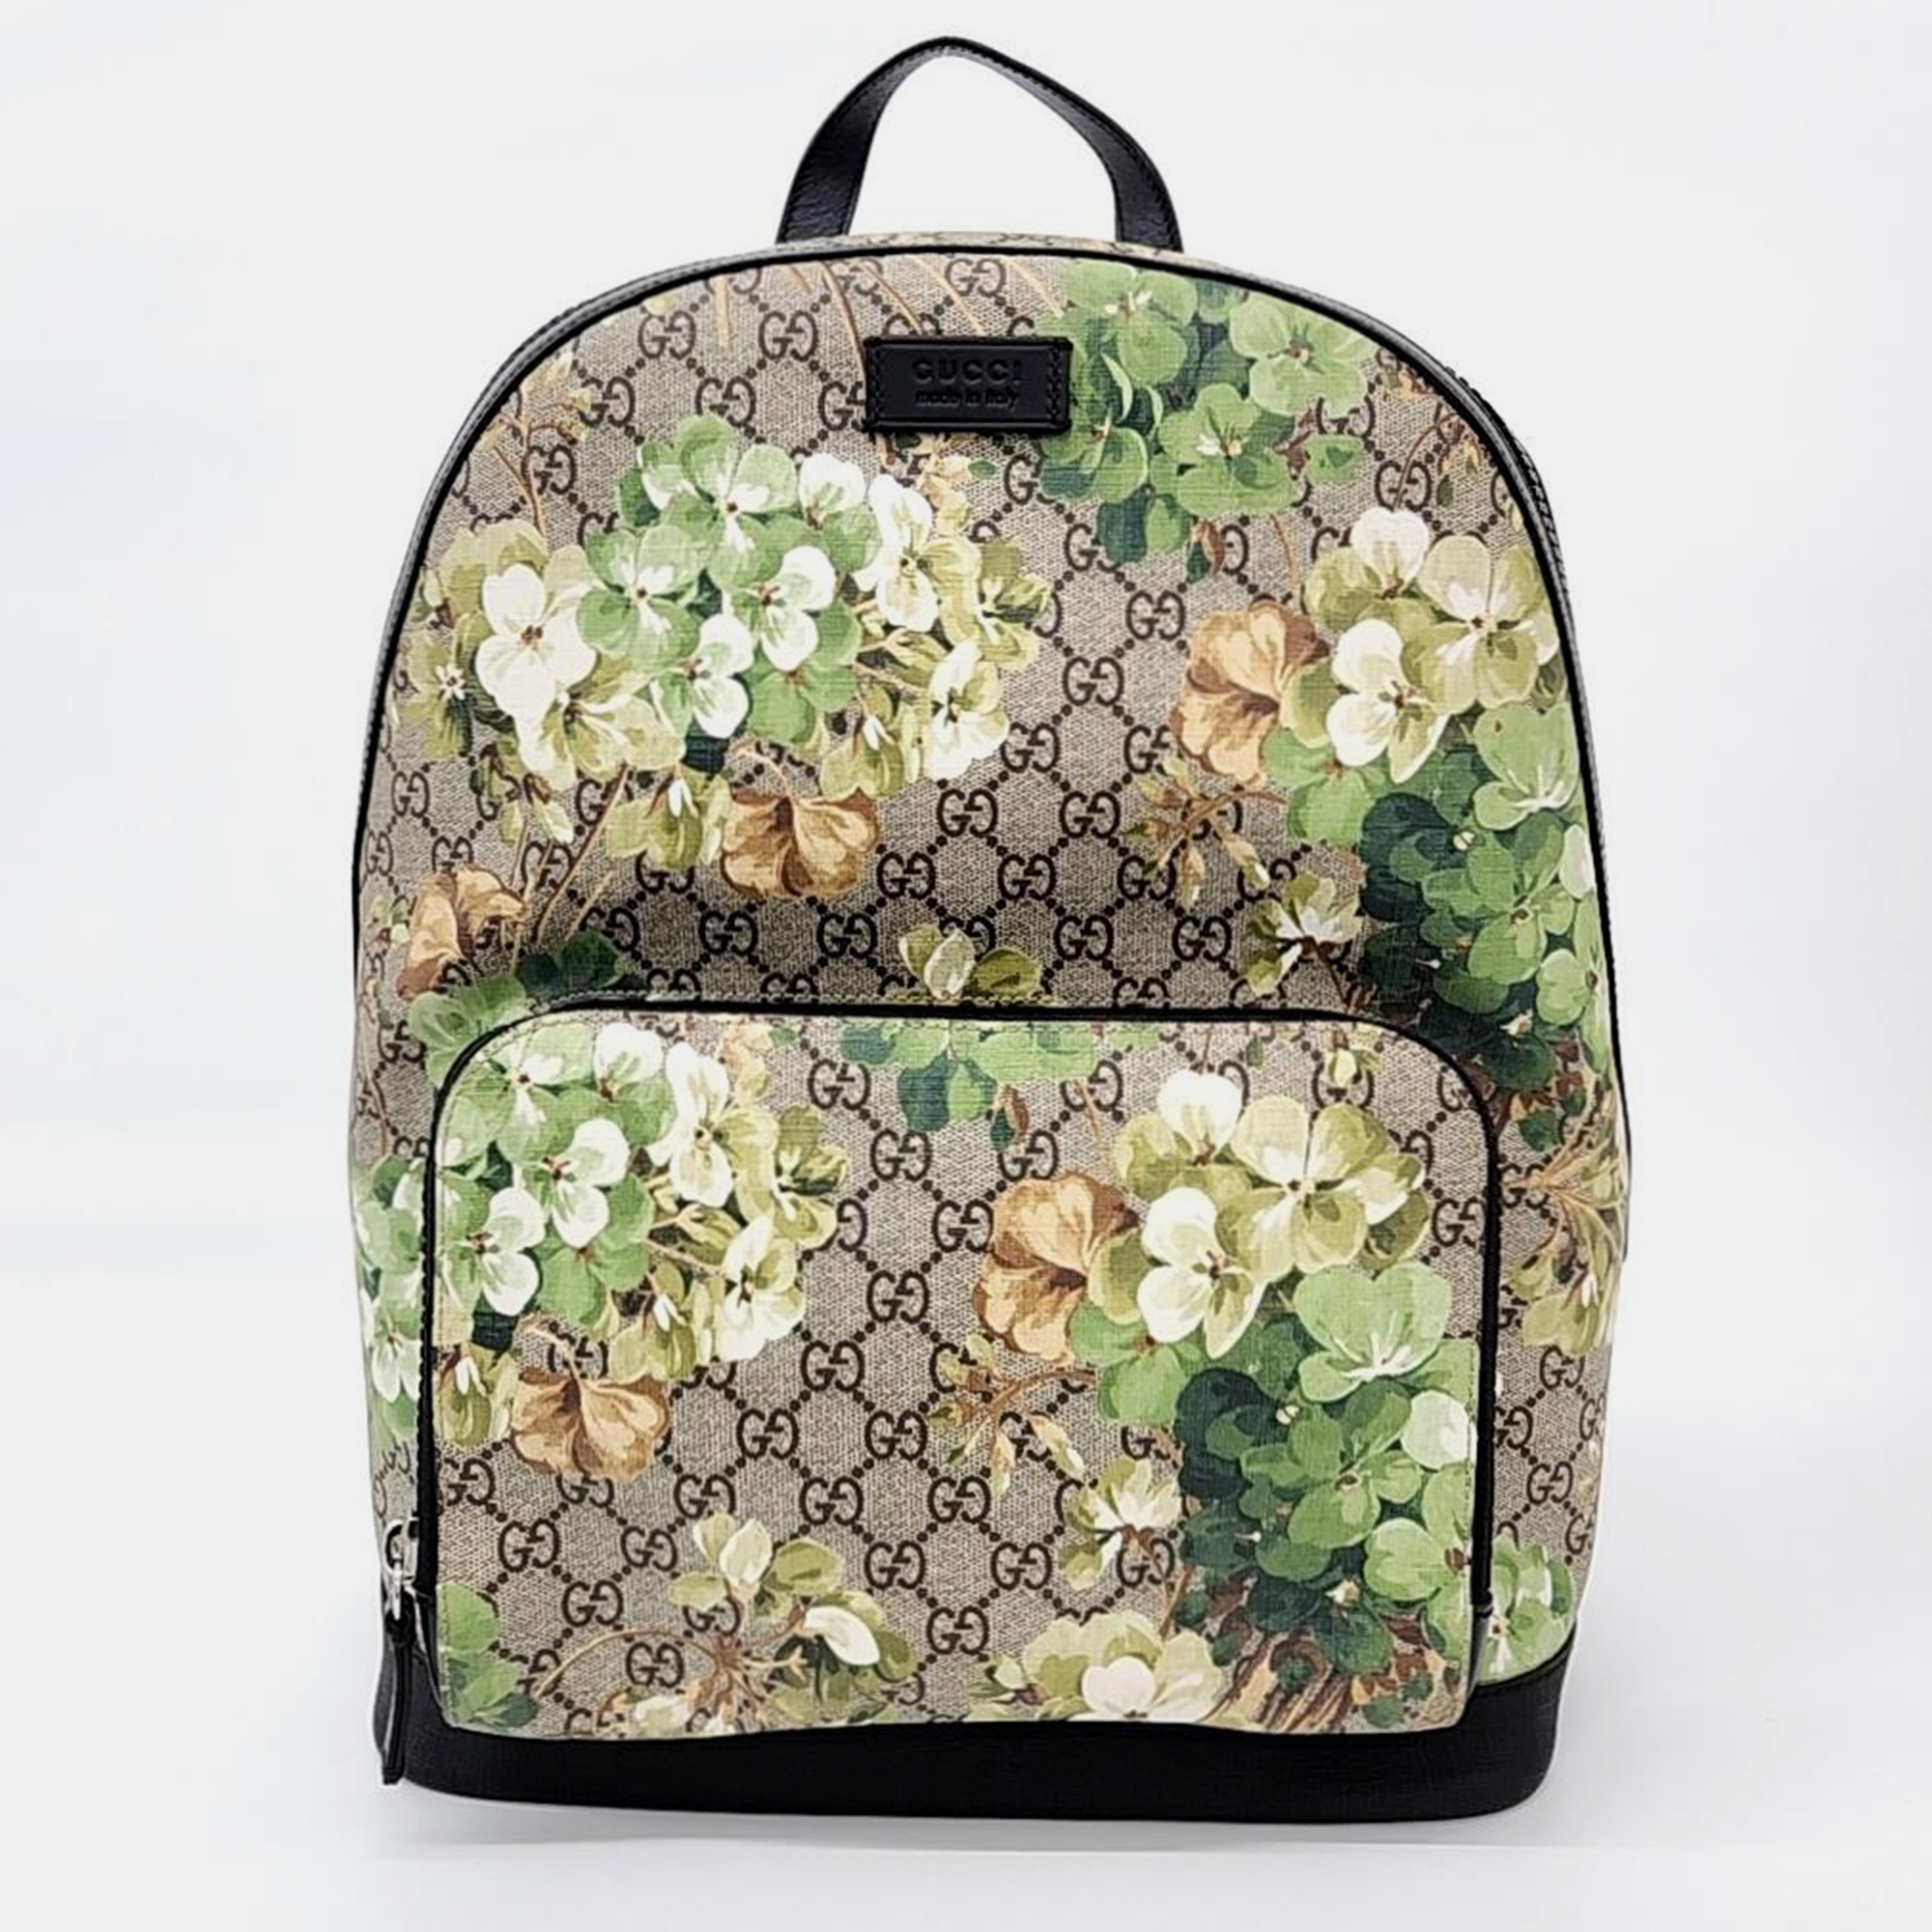 Gucci gg supreme bloom backpack (406370)